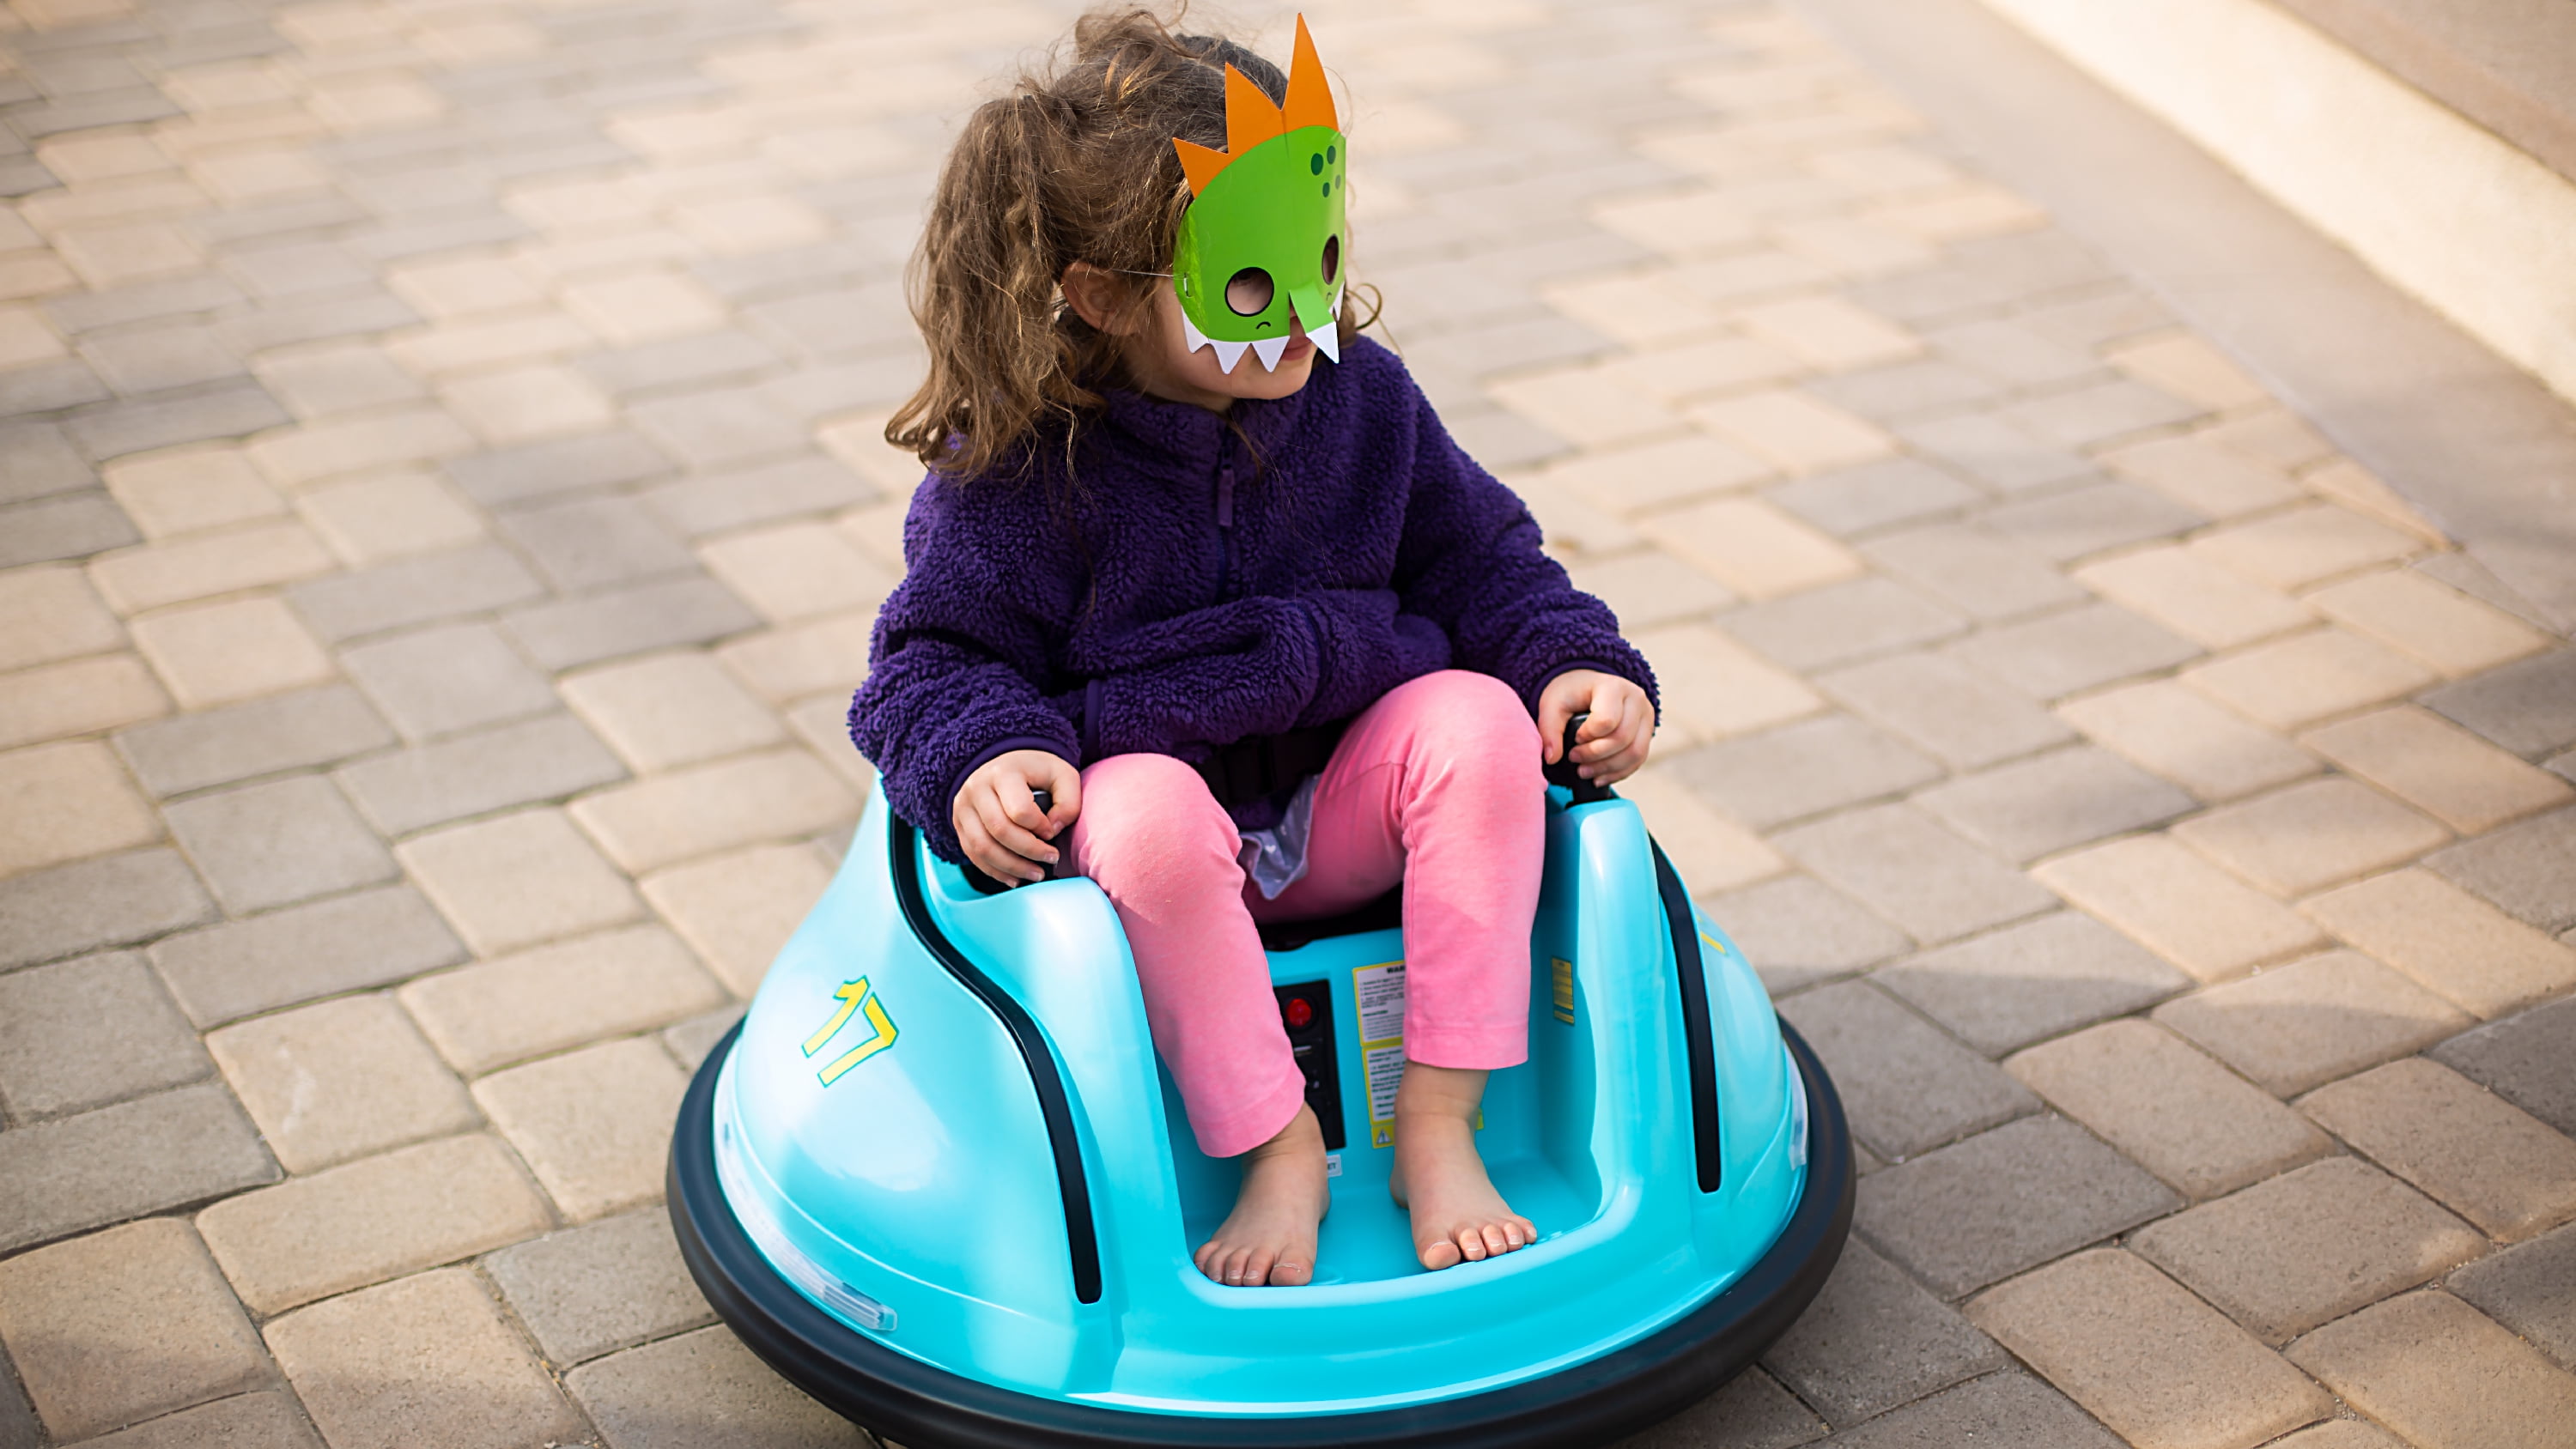 Details about   Kids Bumper Car Safe Electric 6V Ride On Car Remote Control Lights Spinning USA 